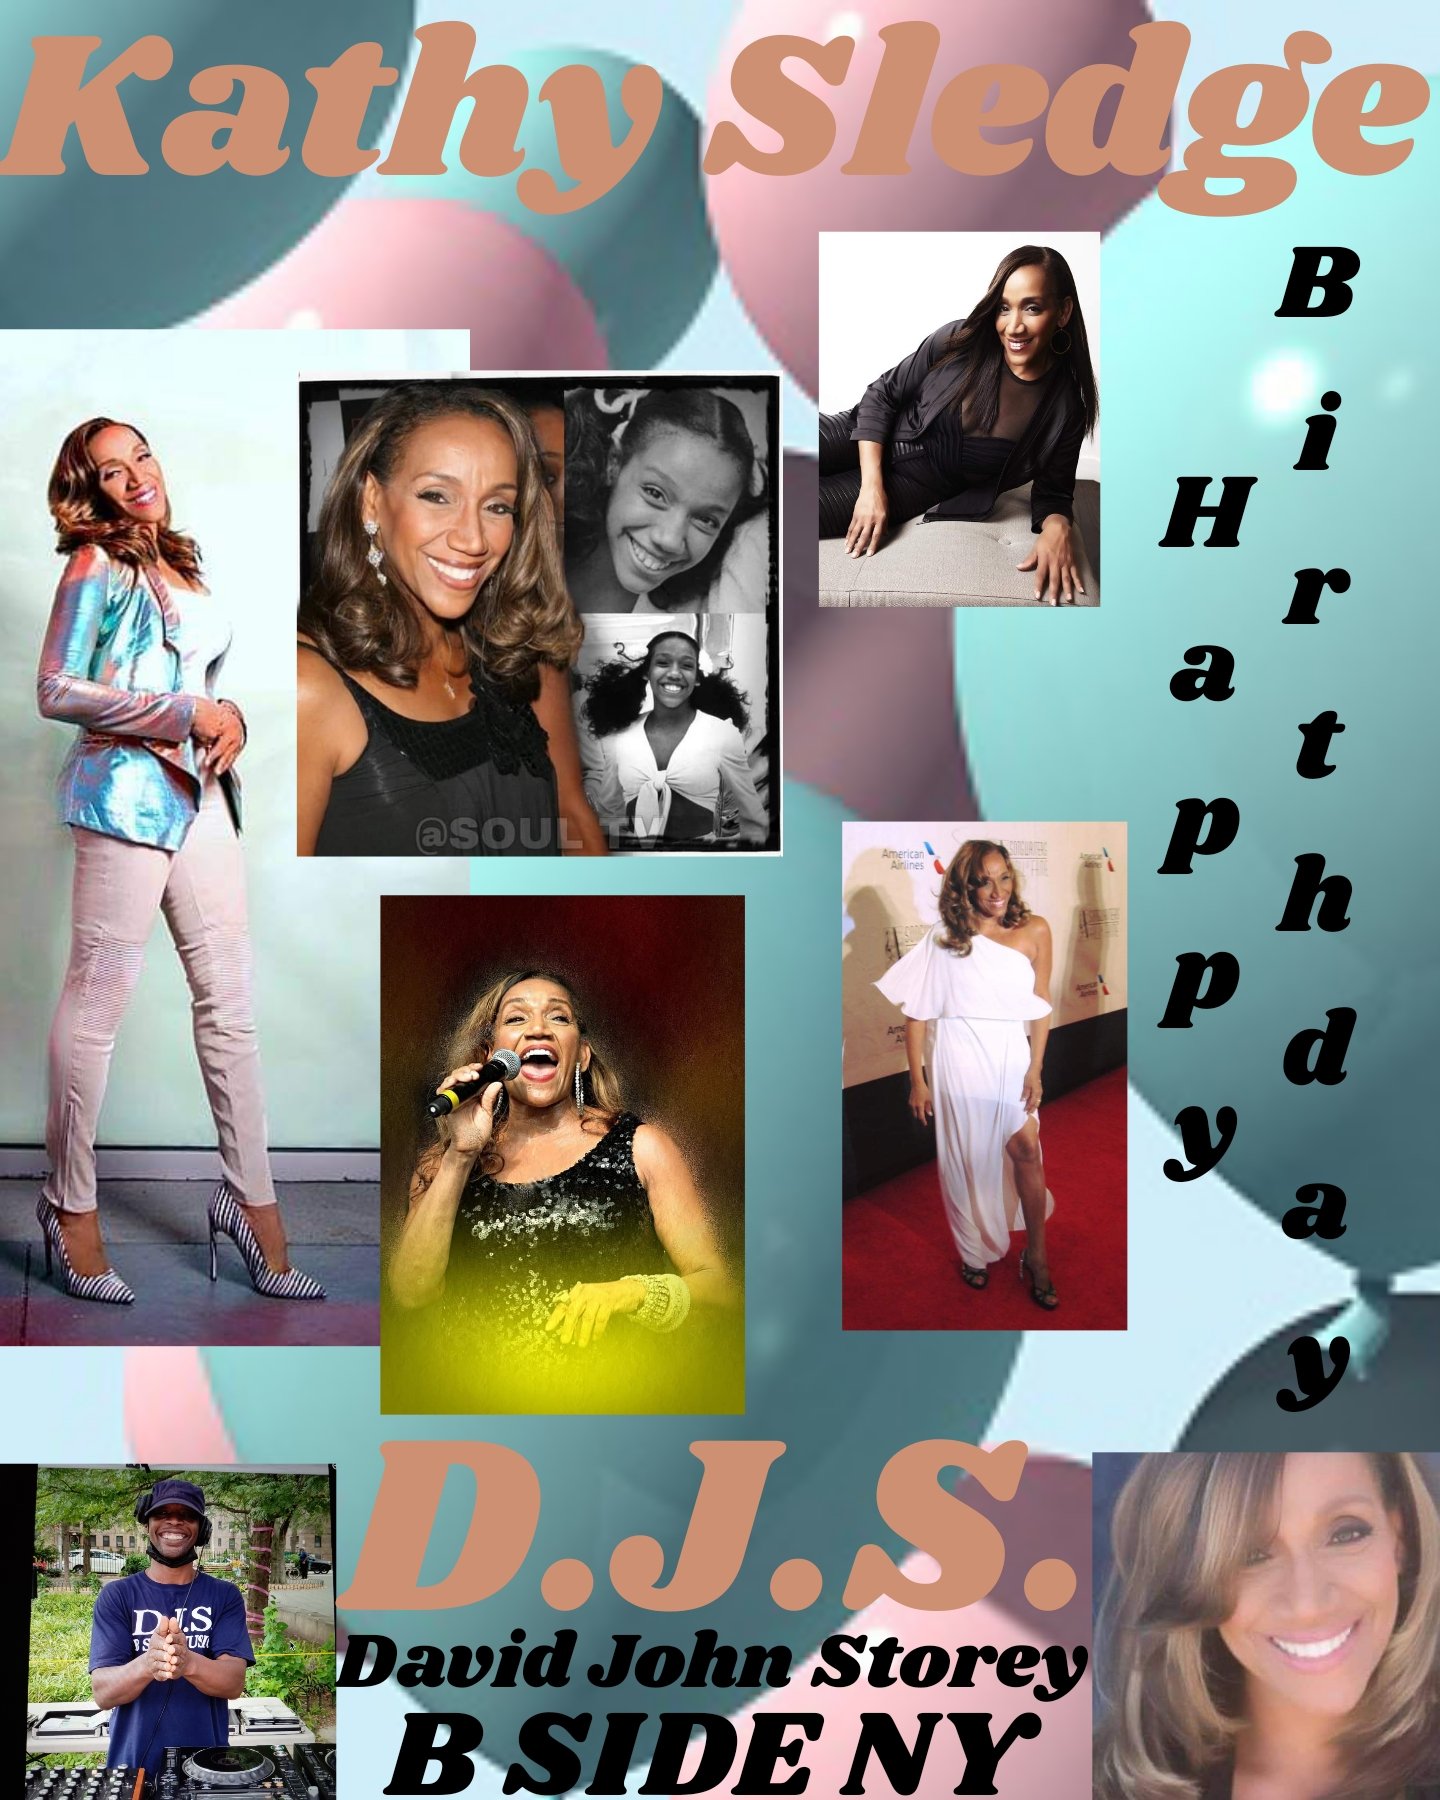 I(D.J.S.)\"B SIDE\" saying Happy Birthday to Singer: \"KATHY SLEDGE\"!!! 